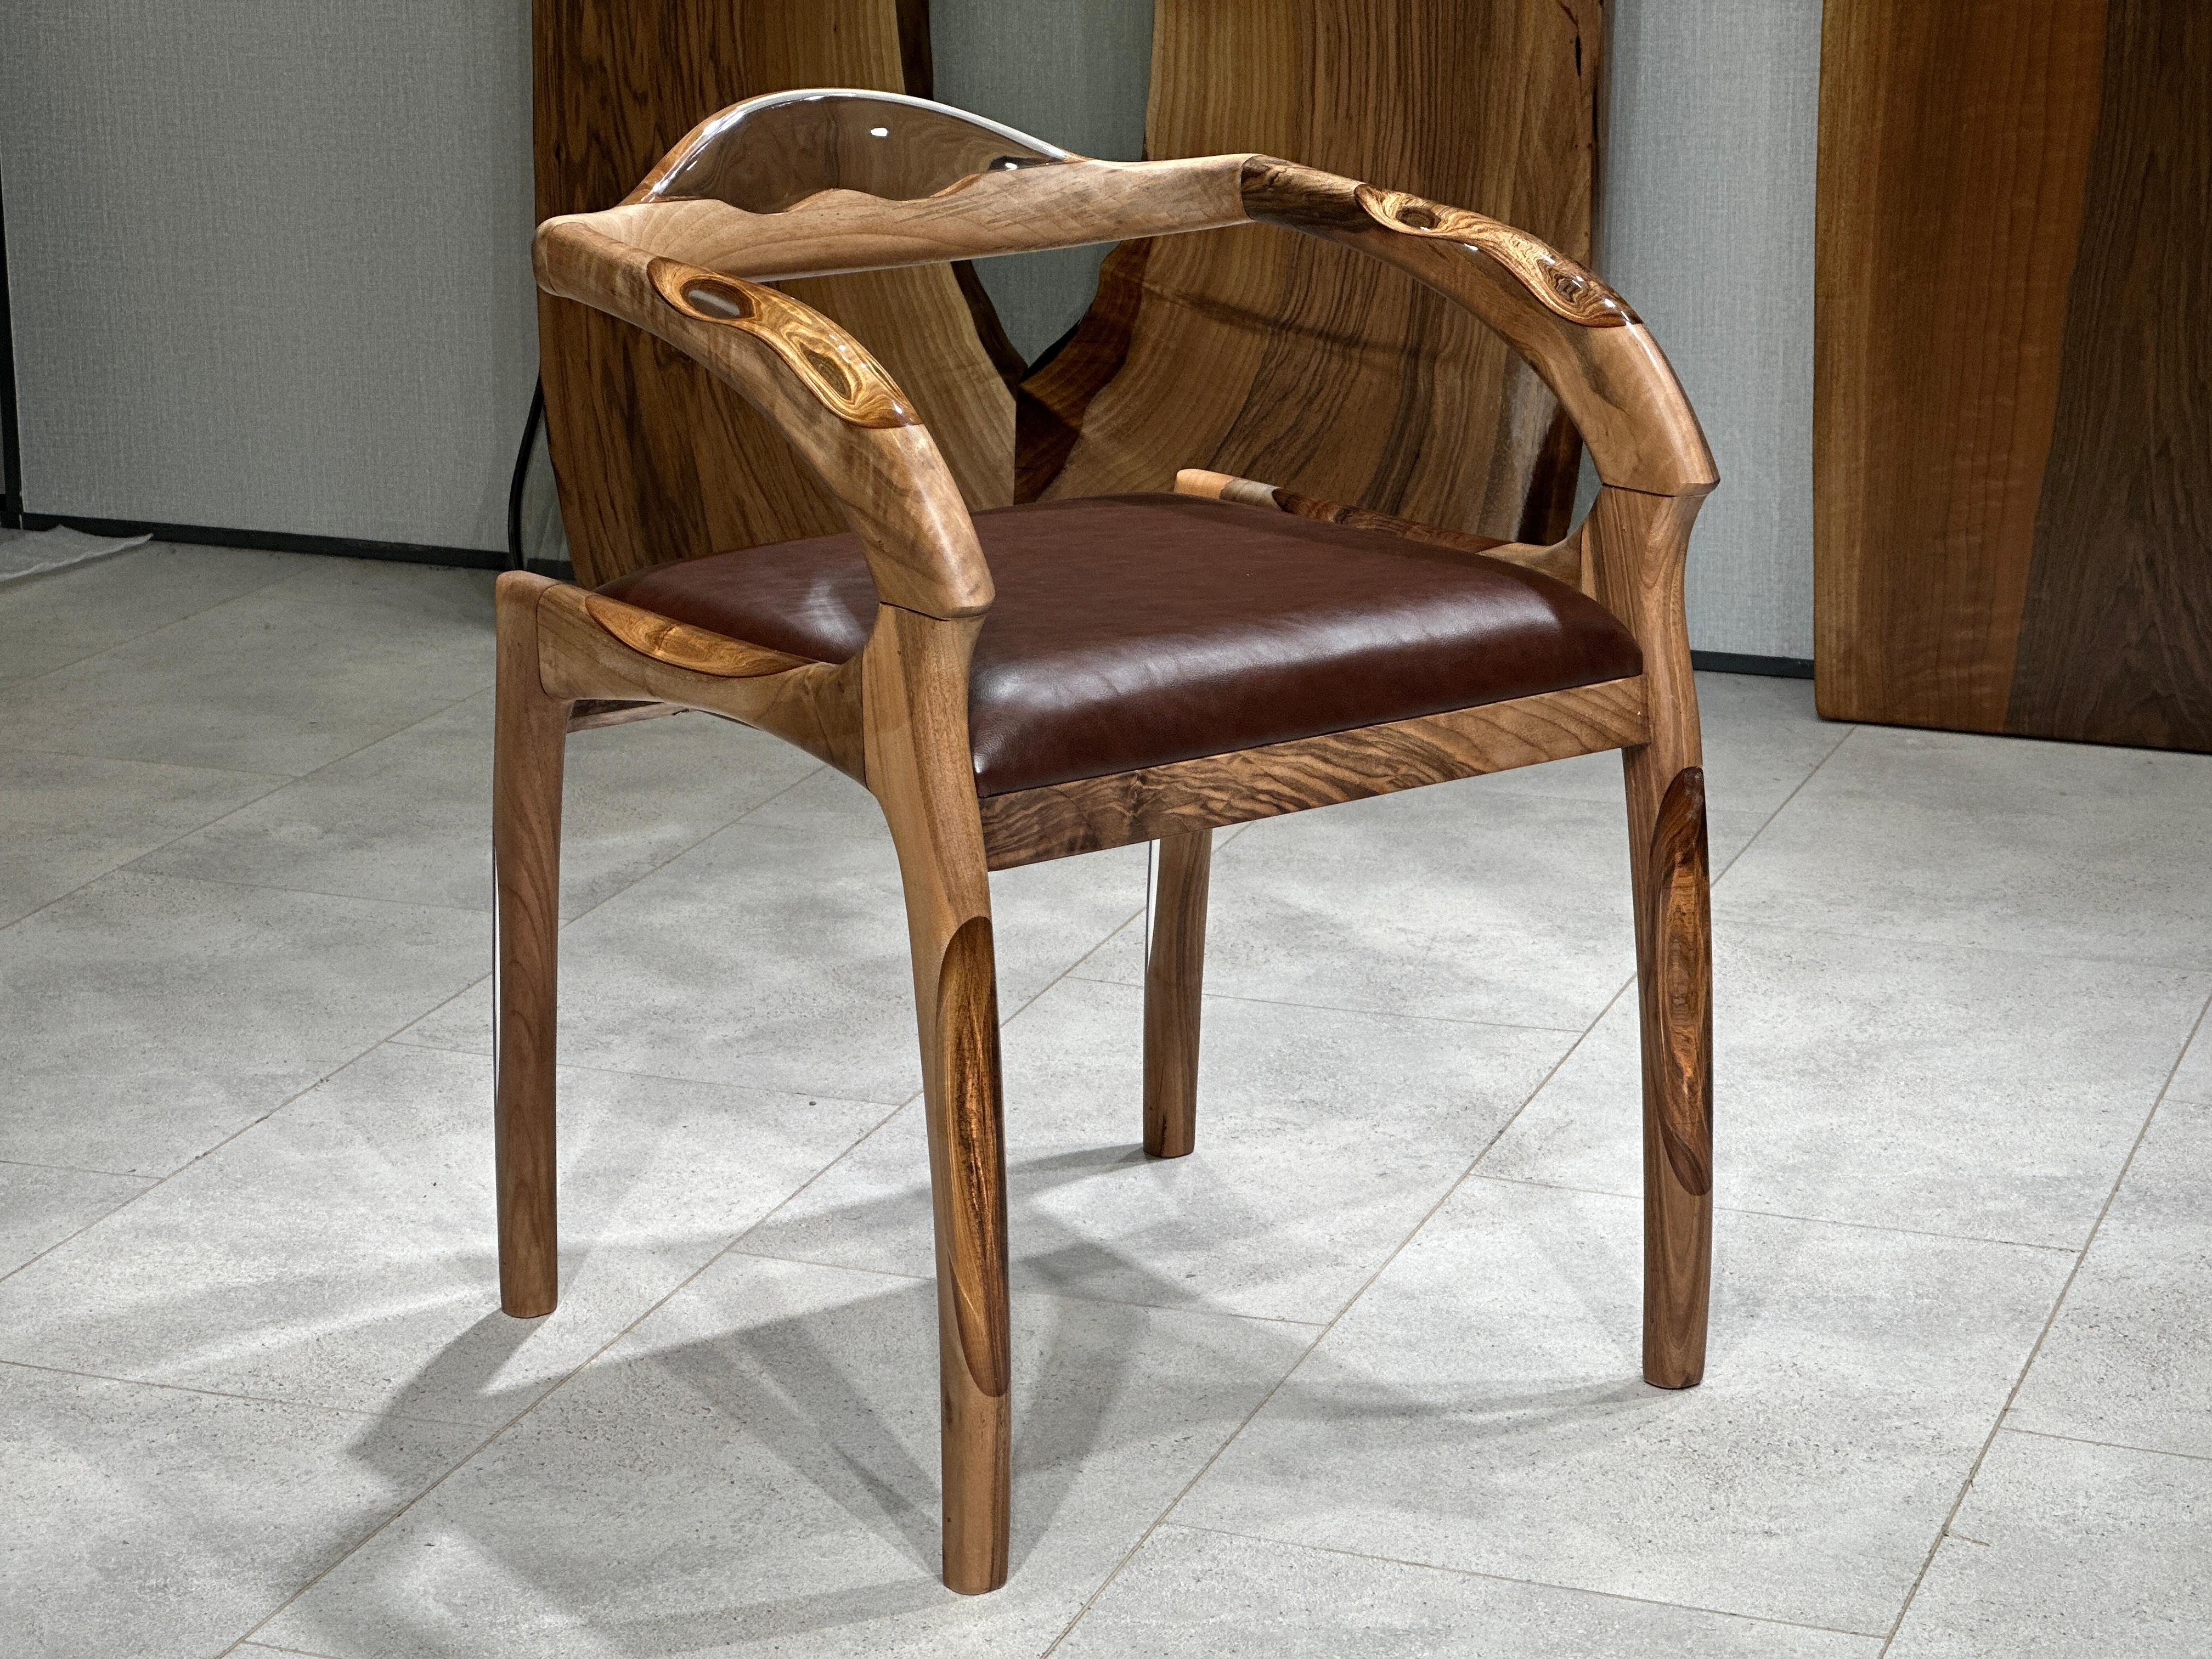 epoxy chair